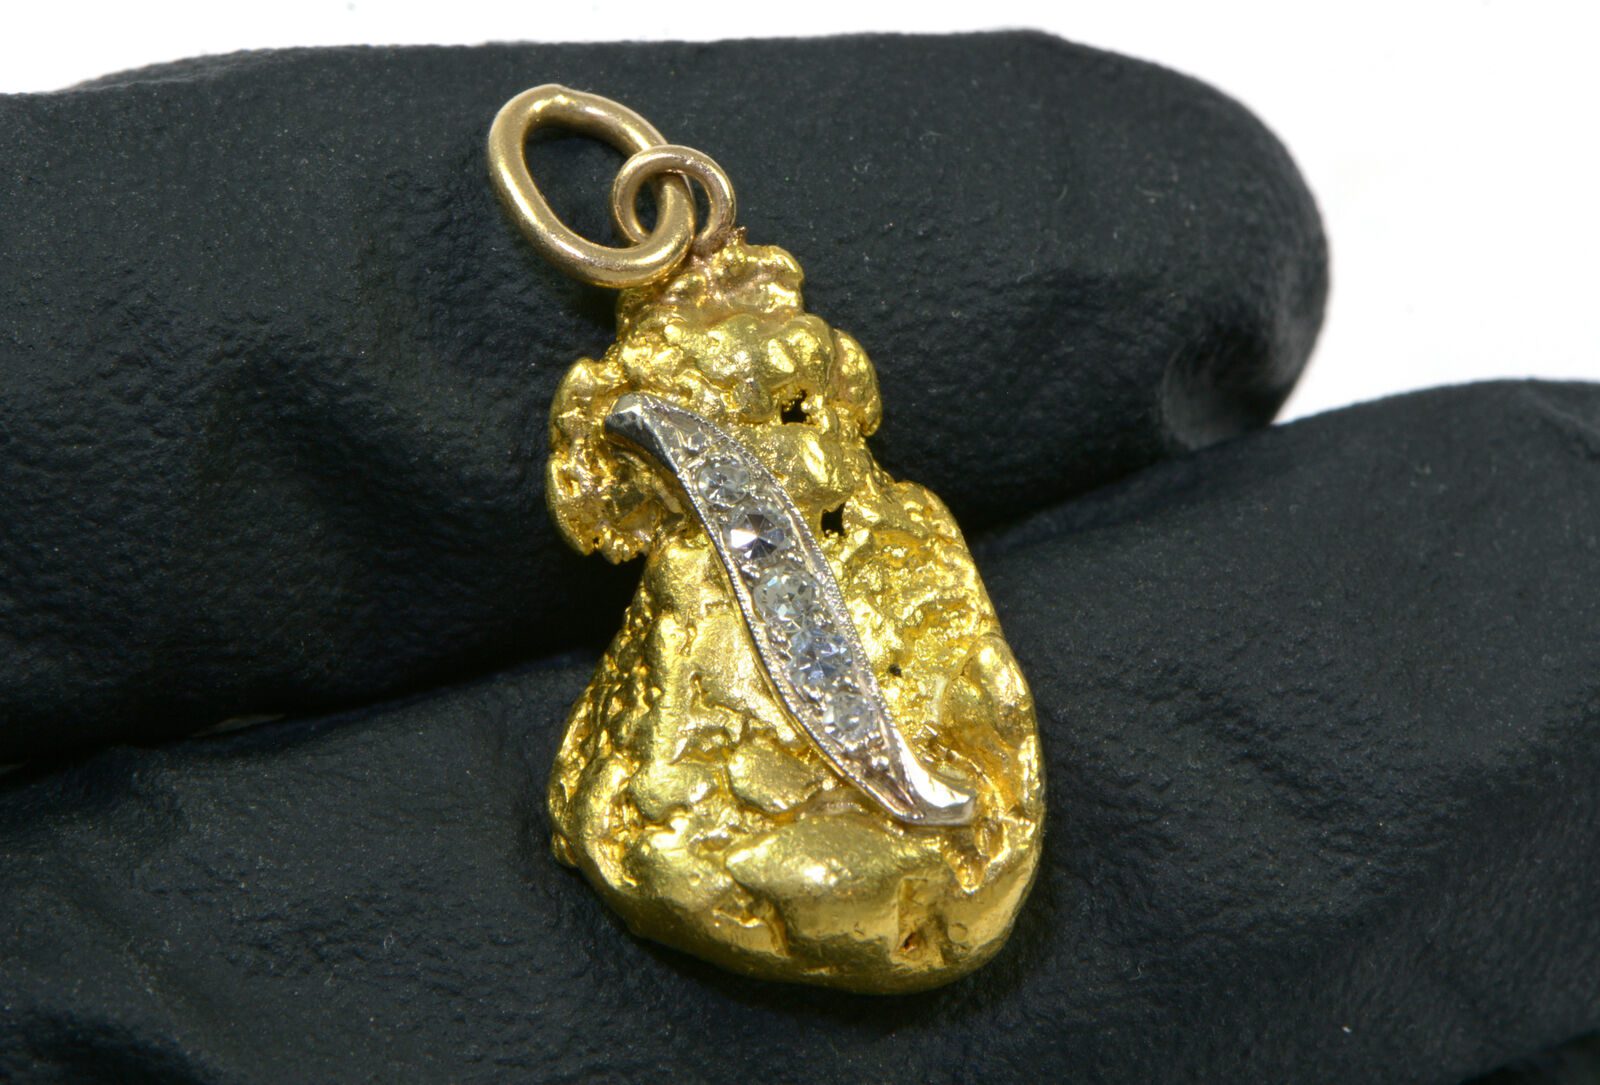 24k-Yellow-Gold-Nugget-Diamond-Pendant-610-Grams-Necklace-Charm-113212939871-2